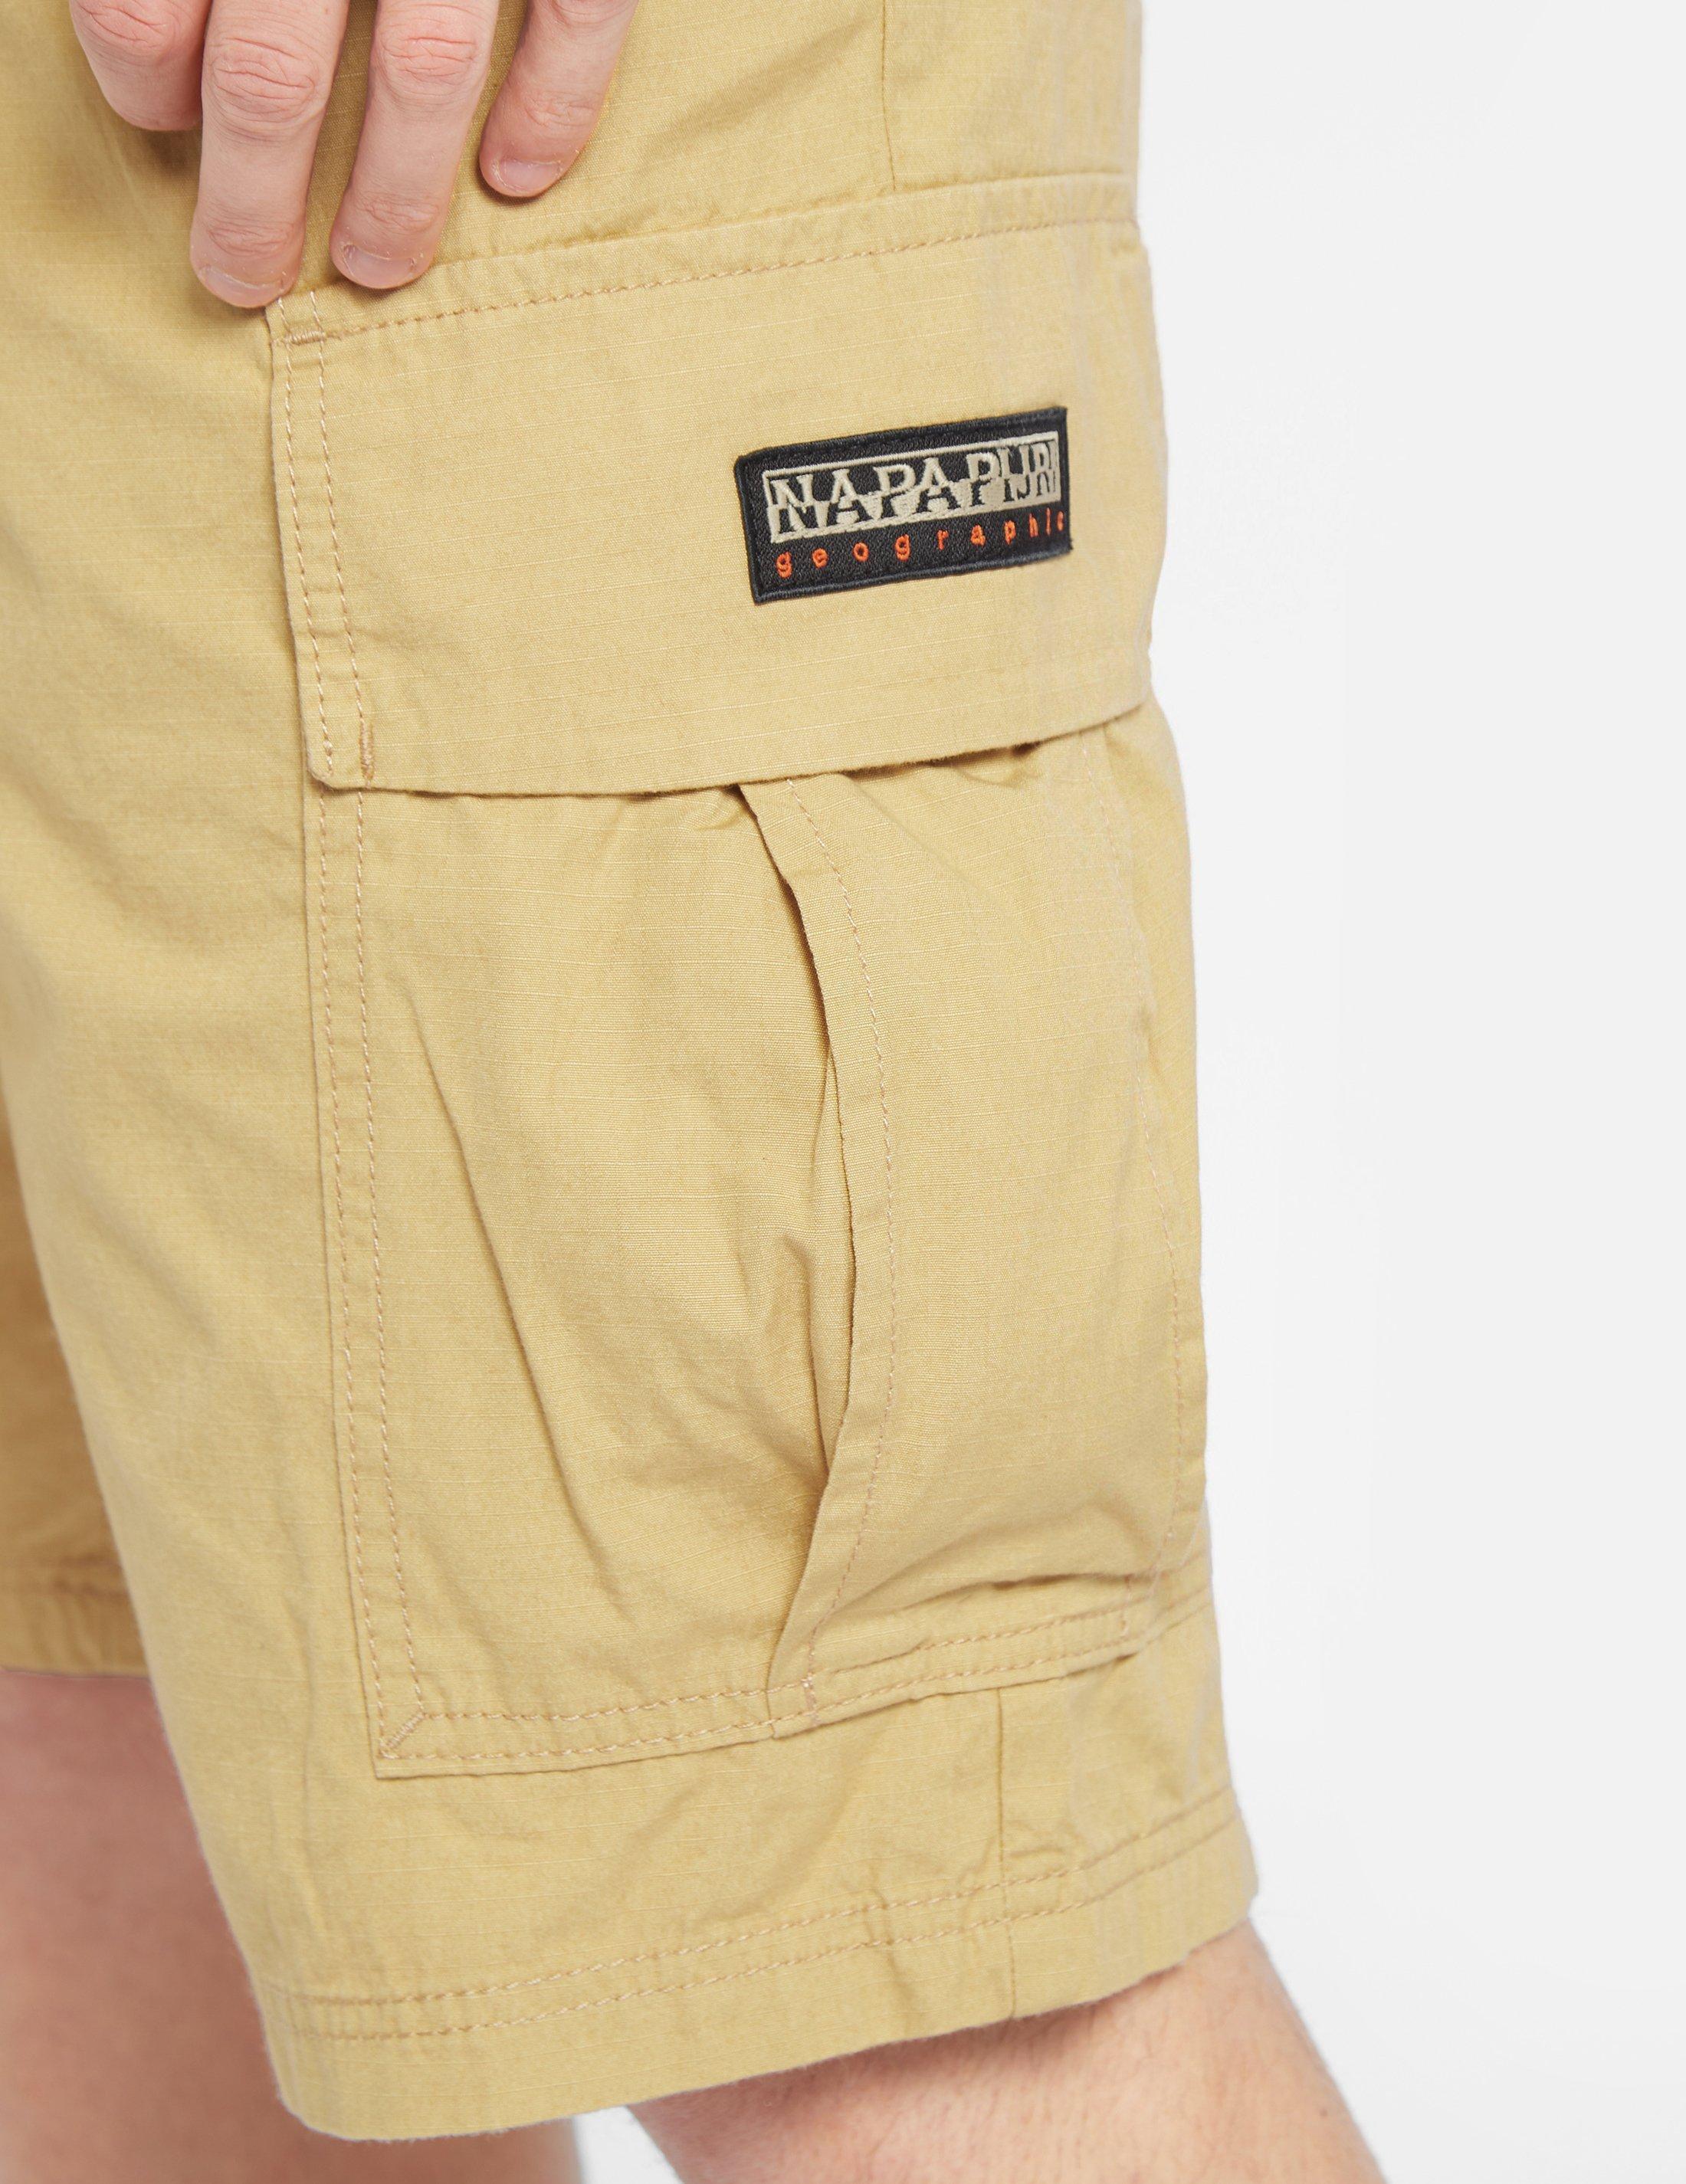 Napapijri Synthetic Ripstop Nylon Shorts in Brown for Men Mens Clothing Shorts Casual shorts 